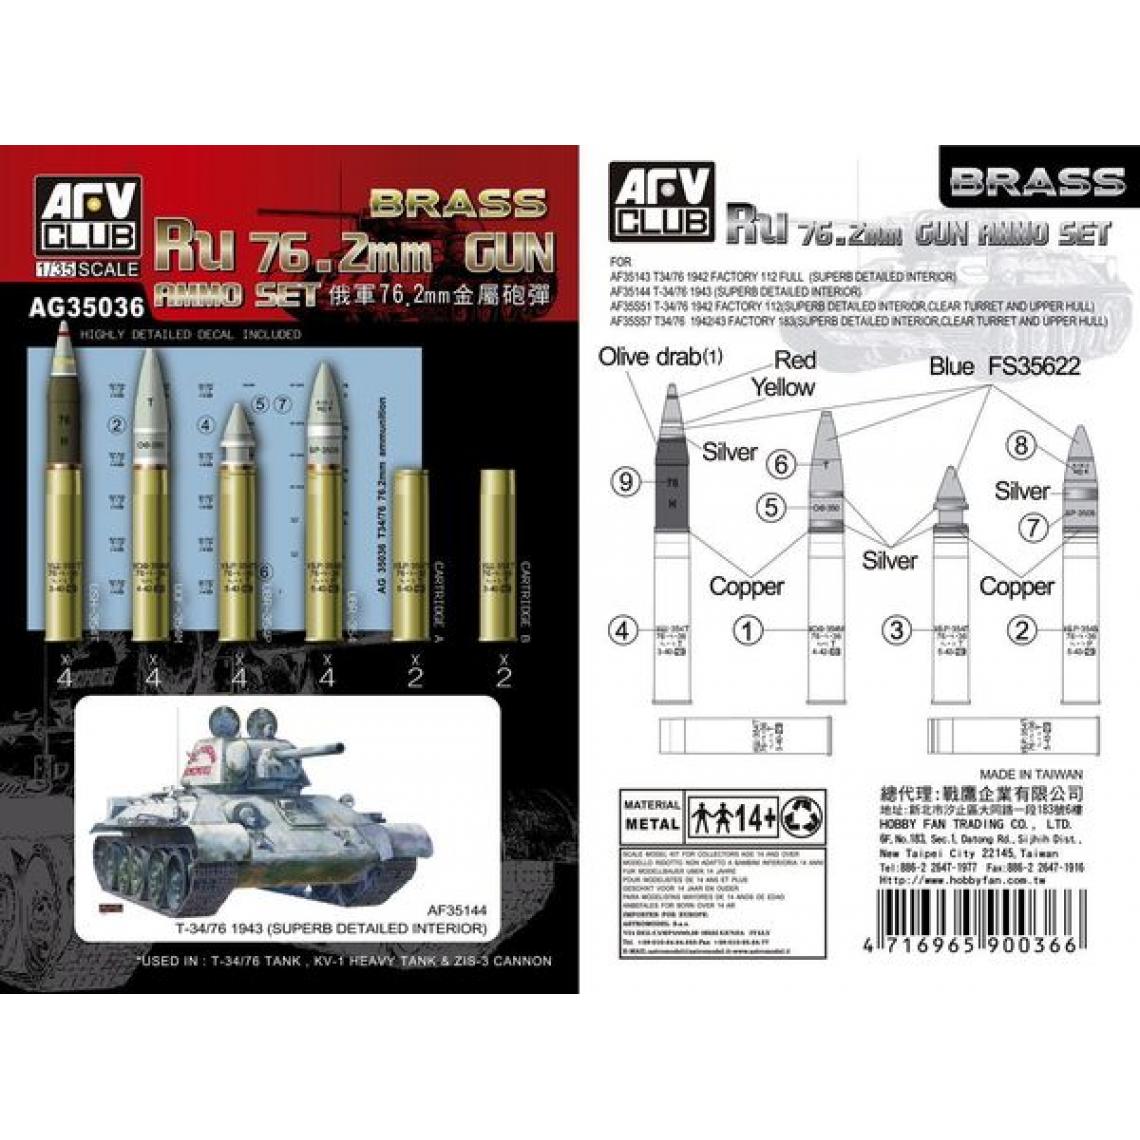 Afv Club - Ru 76.2mm Gun AMMO Set (Brass) - 1:35e - AFV-Club - Accessoires et pièces